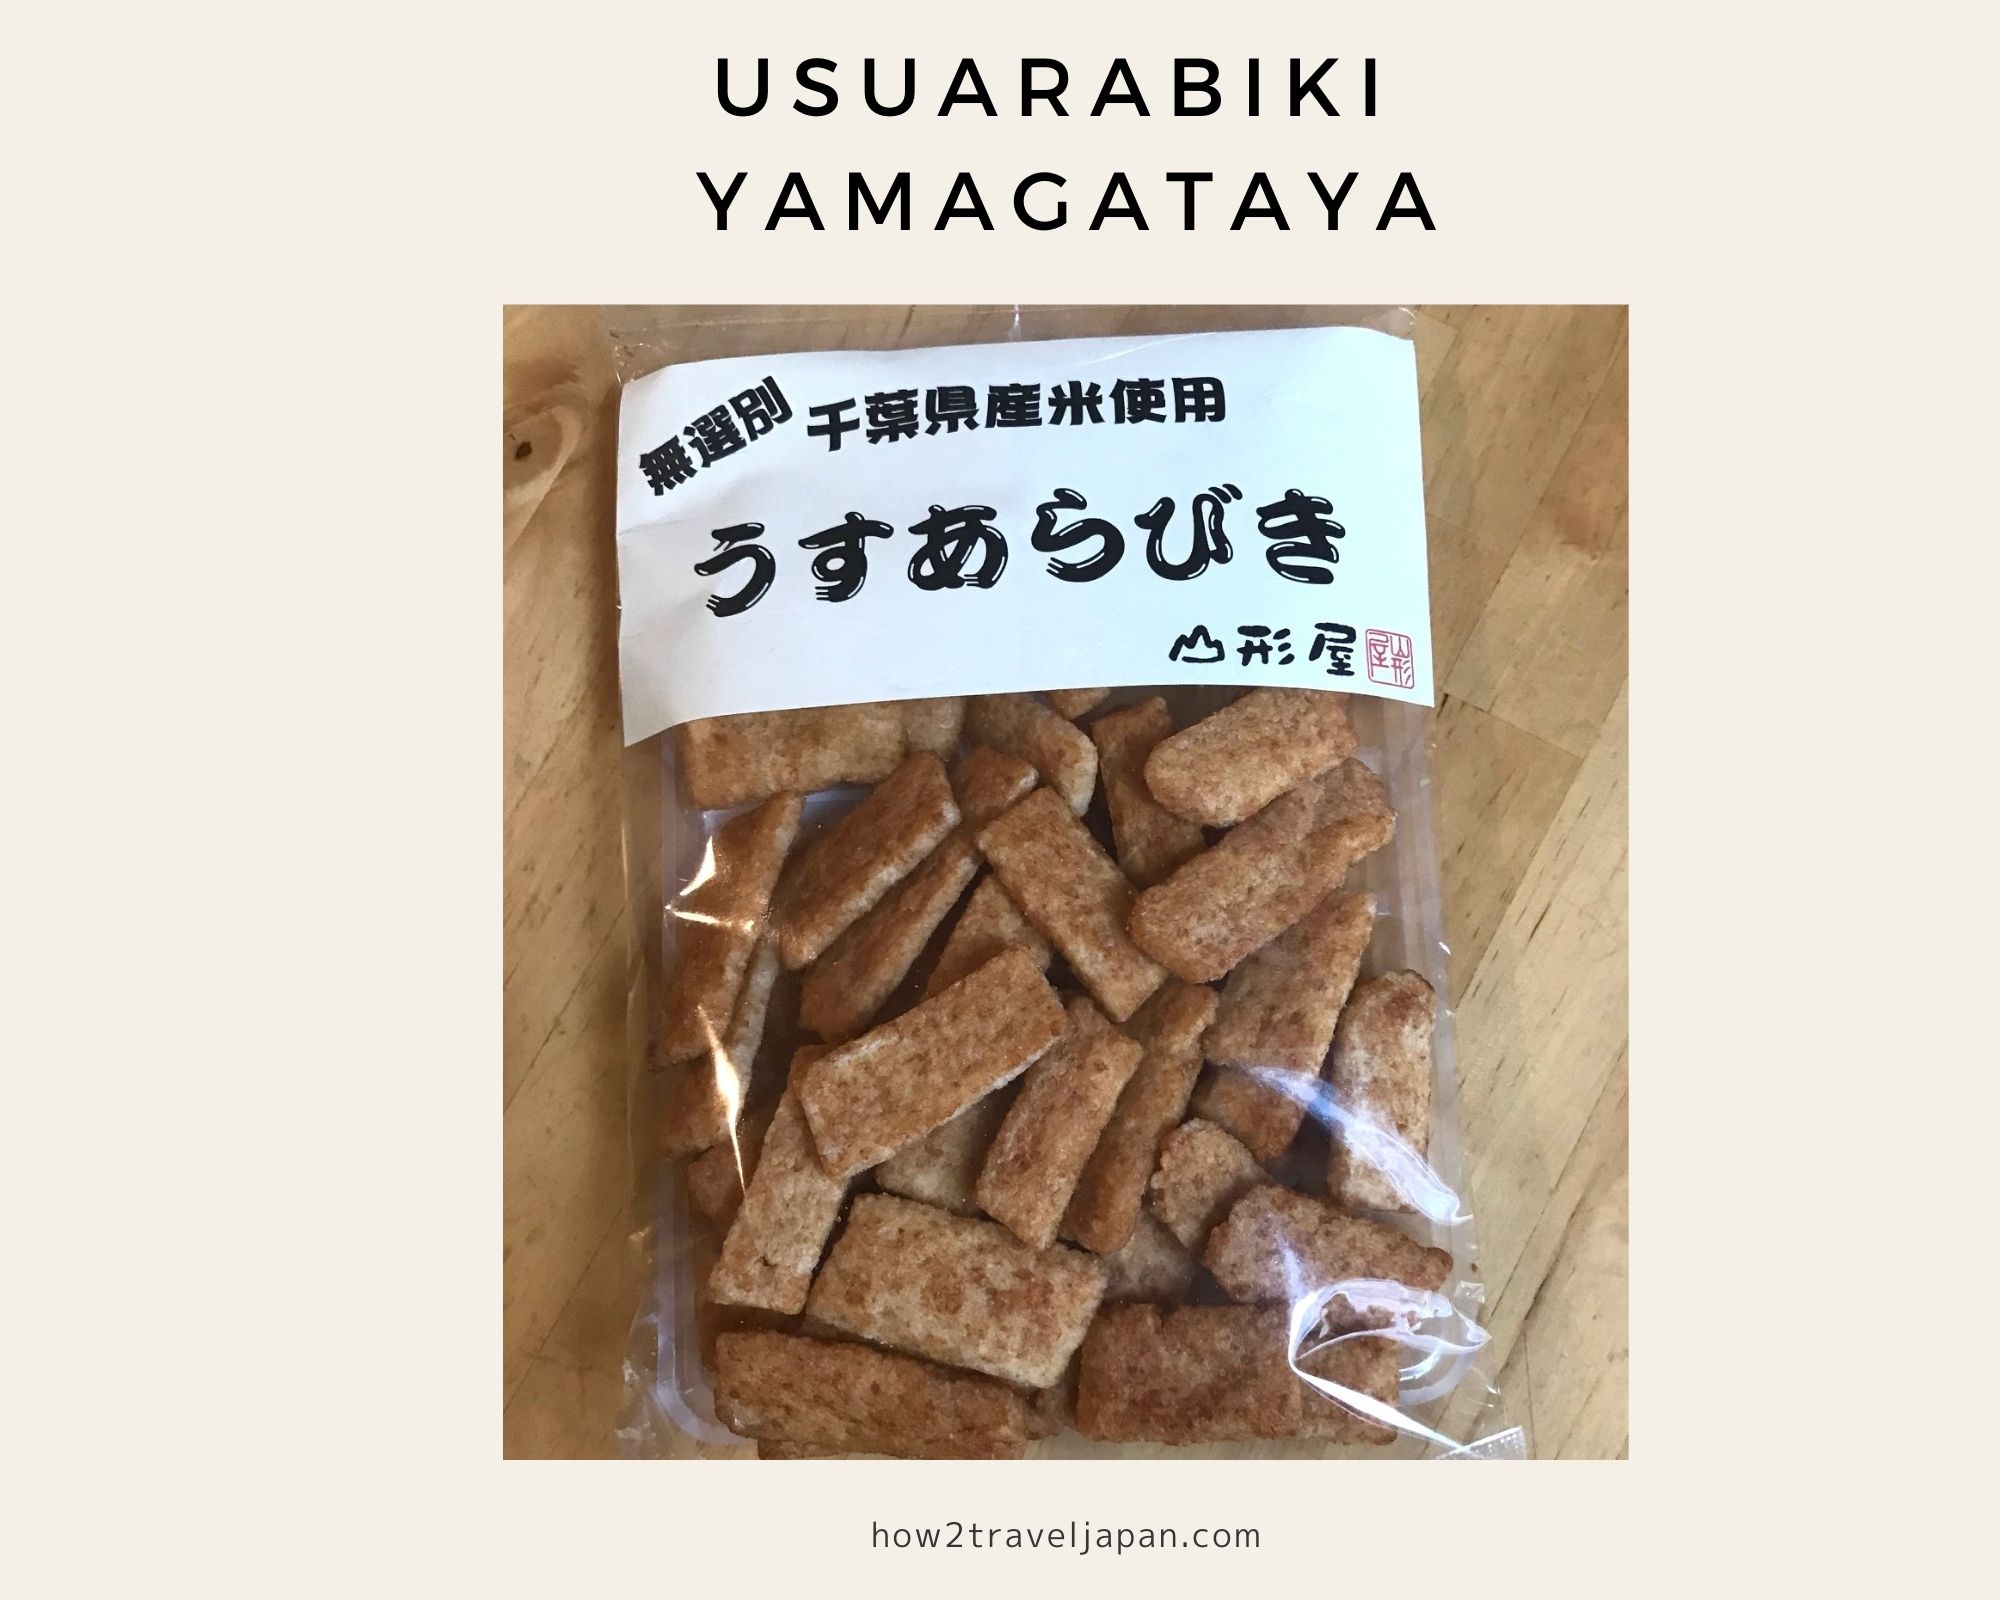 You are currently viewing Usuarabiki Yamagataya, rice cracker from Chiba